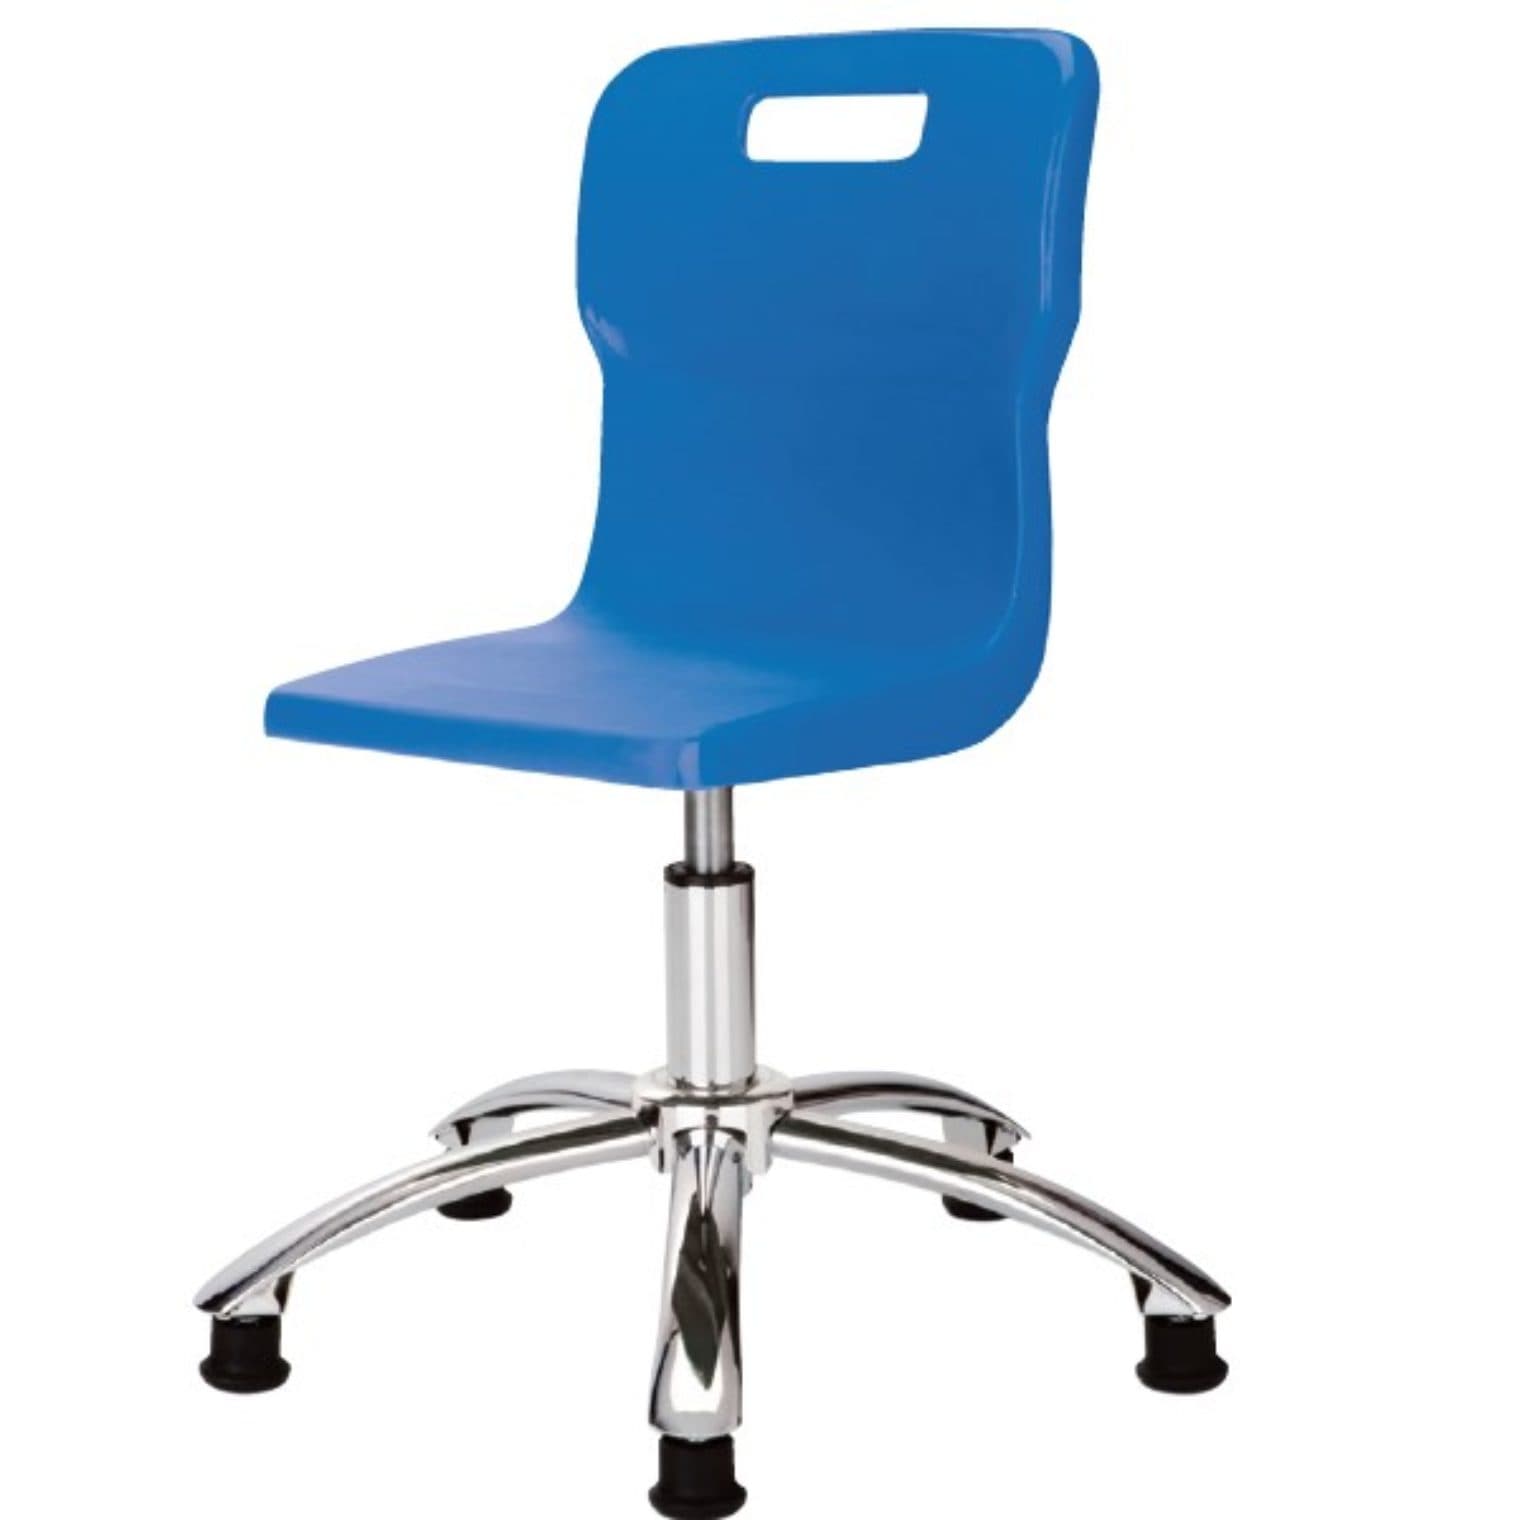 Positive Posture IT chair